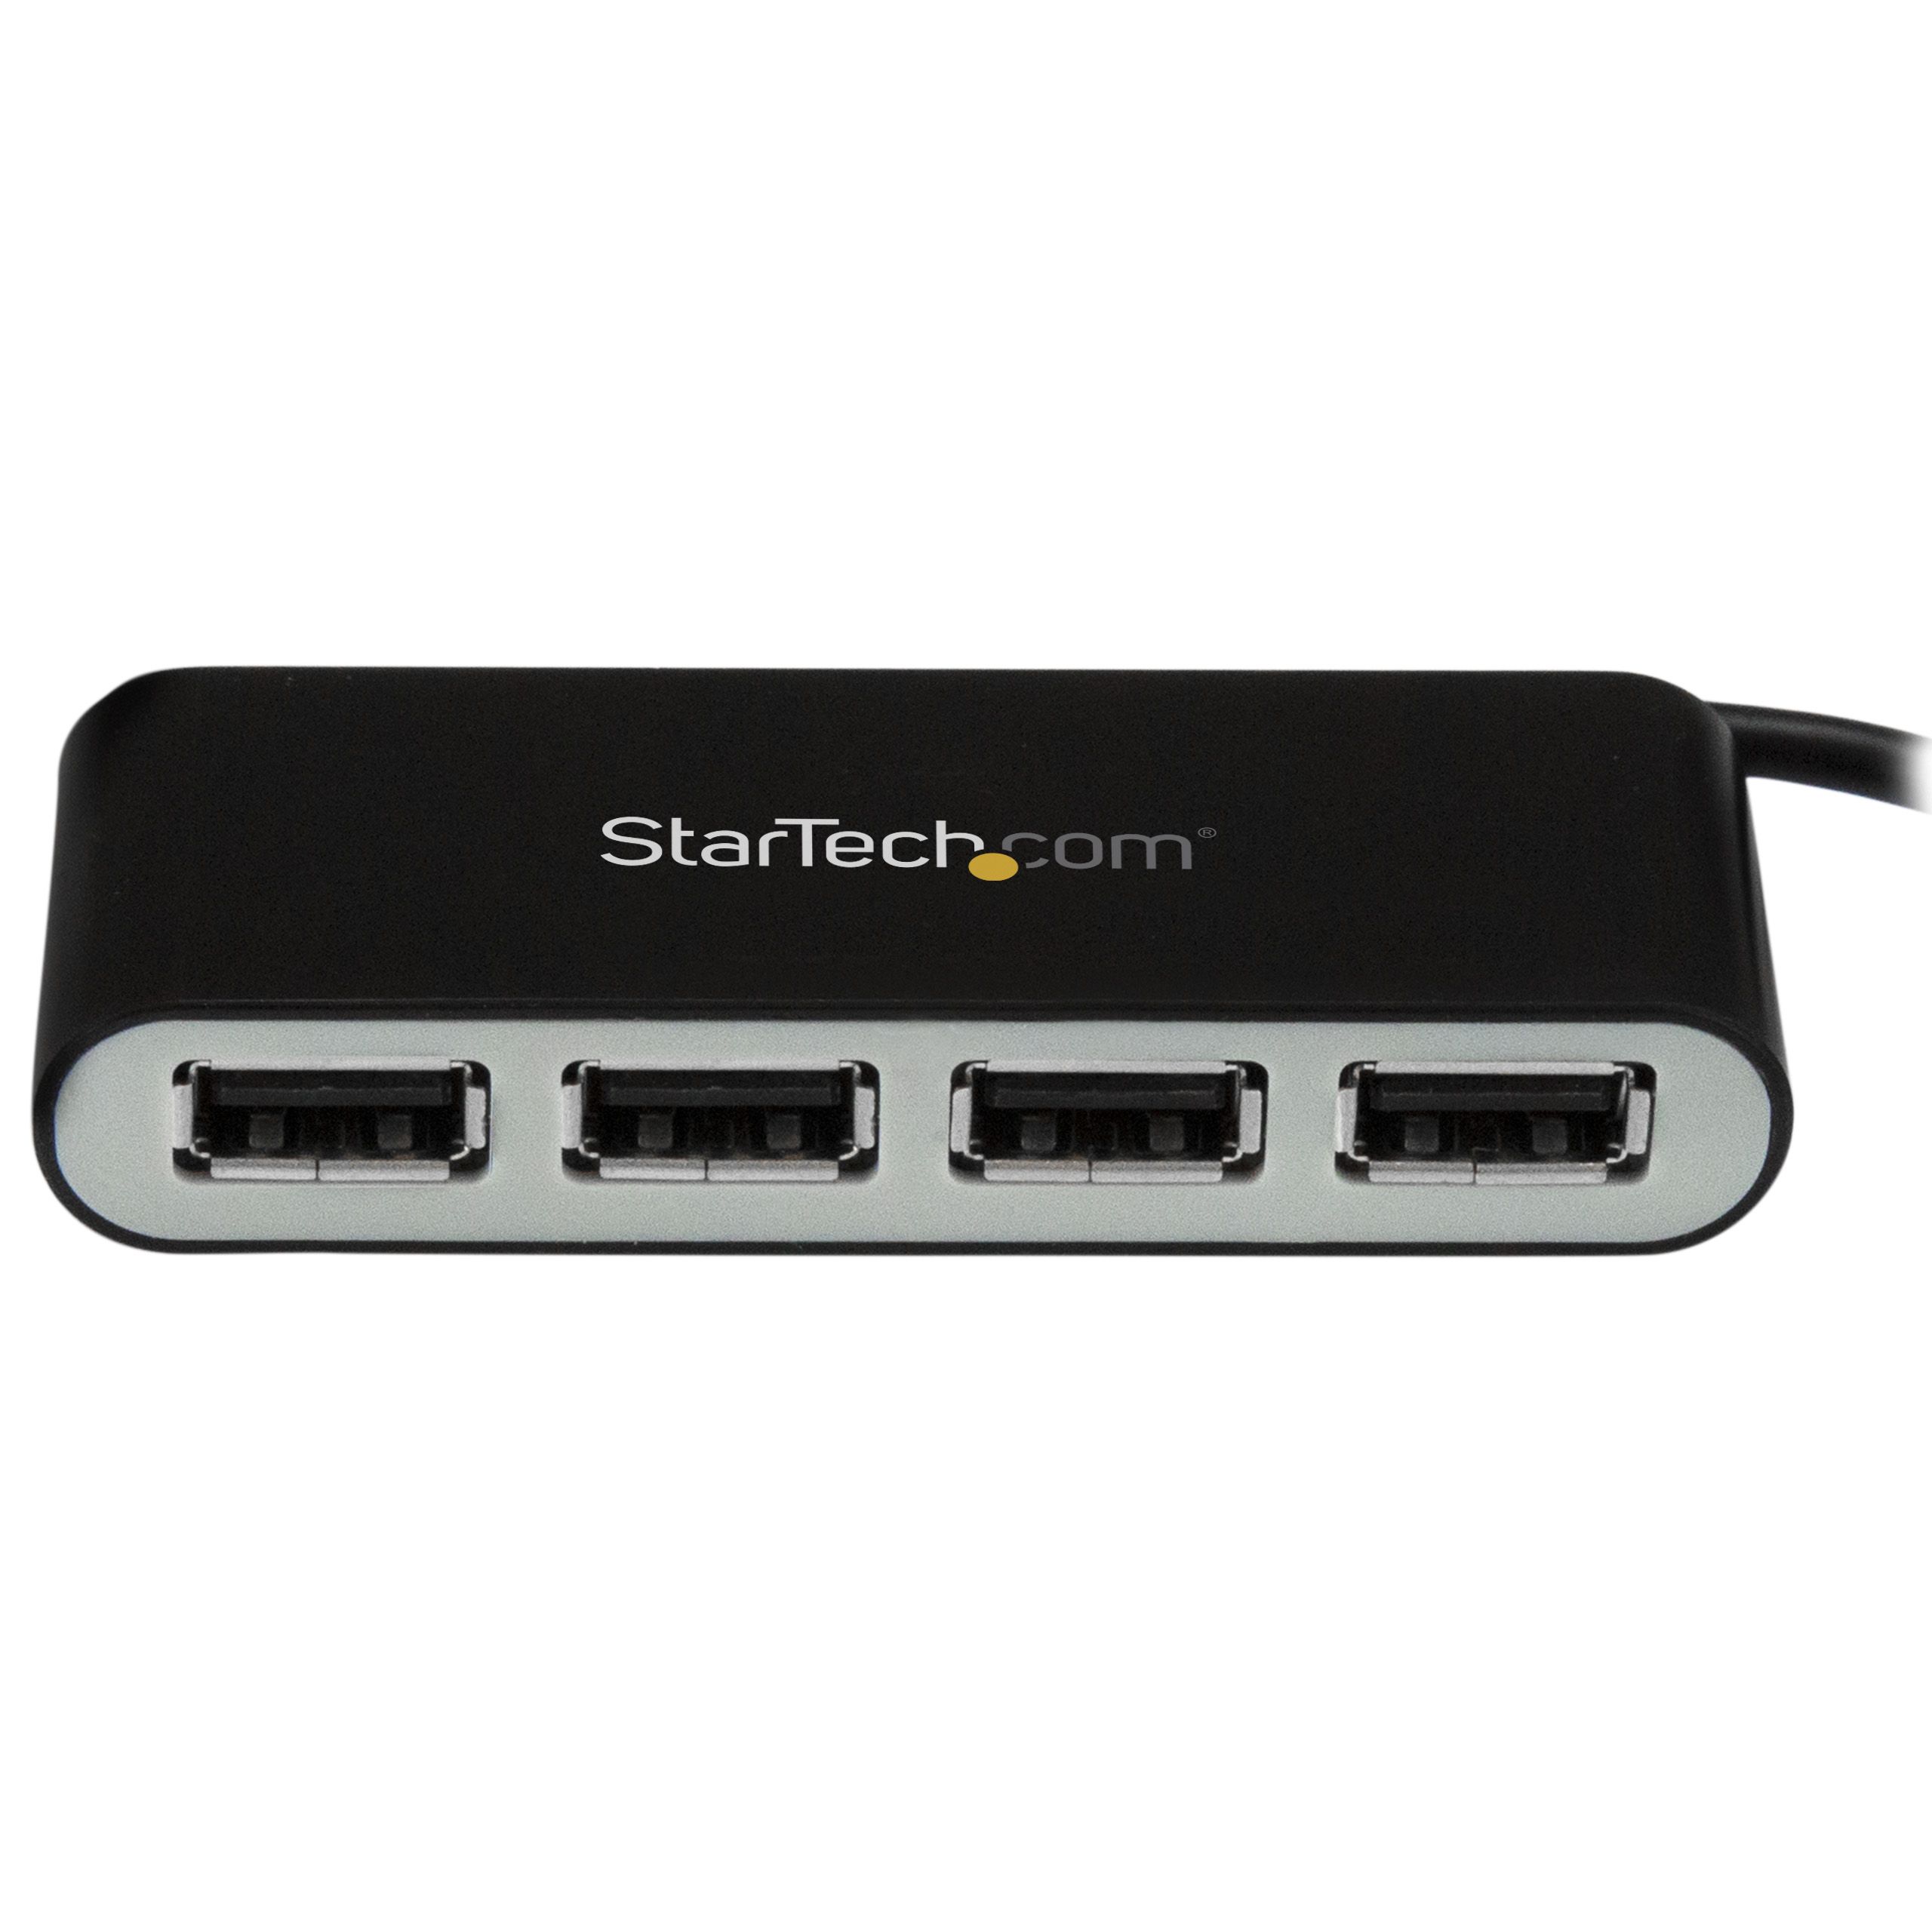 StarTech.com 4 Port USB 2.0 Hub - USB Bus Powered - Portable Multi Port USB 2.0 Splitter and Expander Hub - Small Travel USB Hub - image 4 of 6